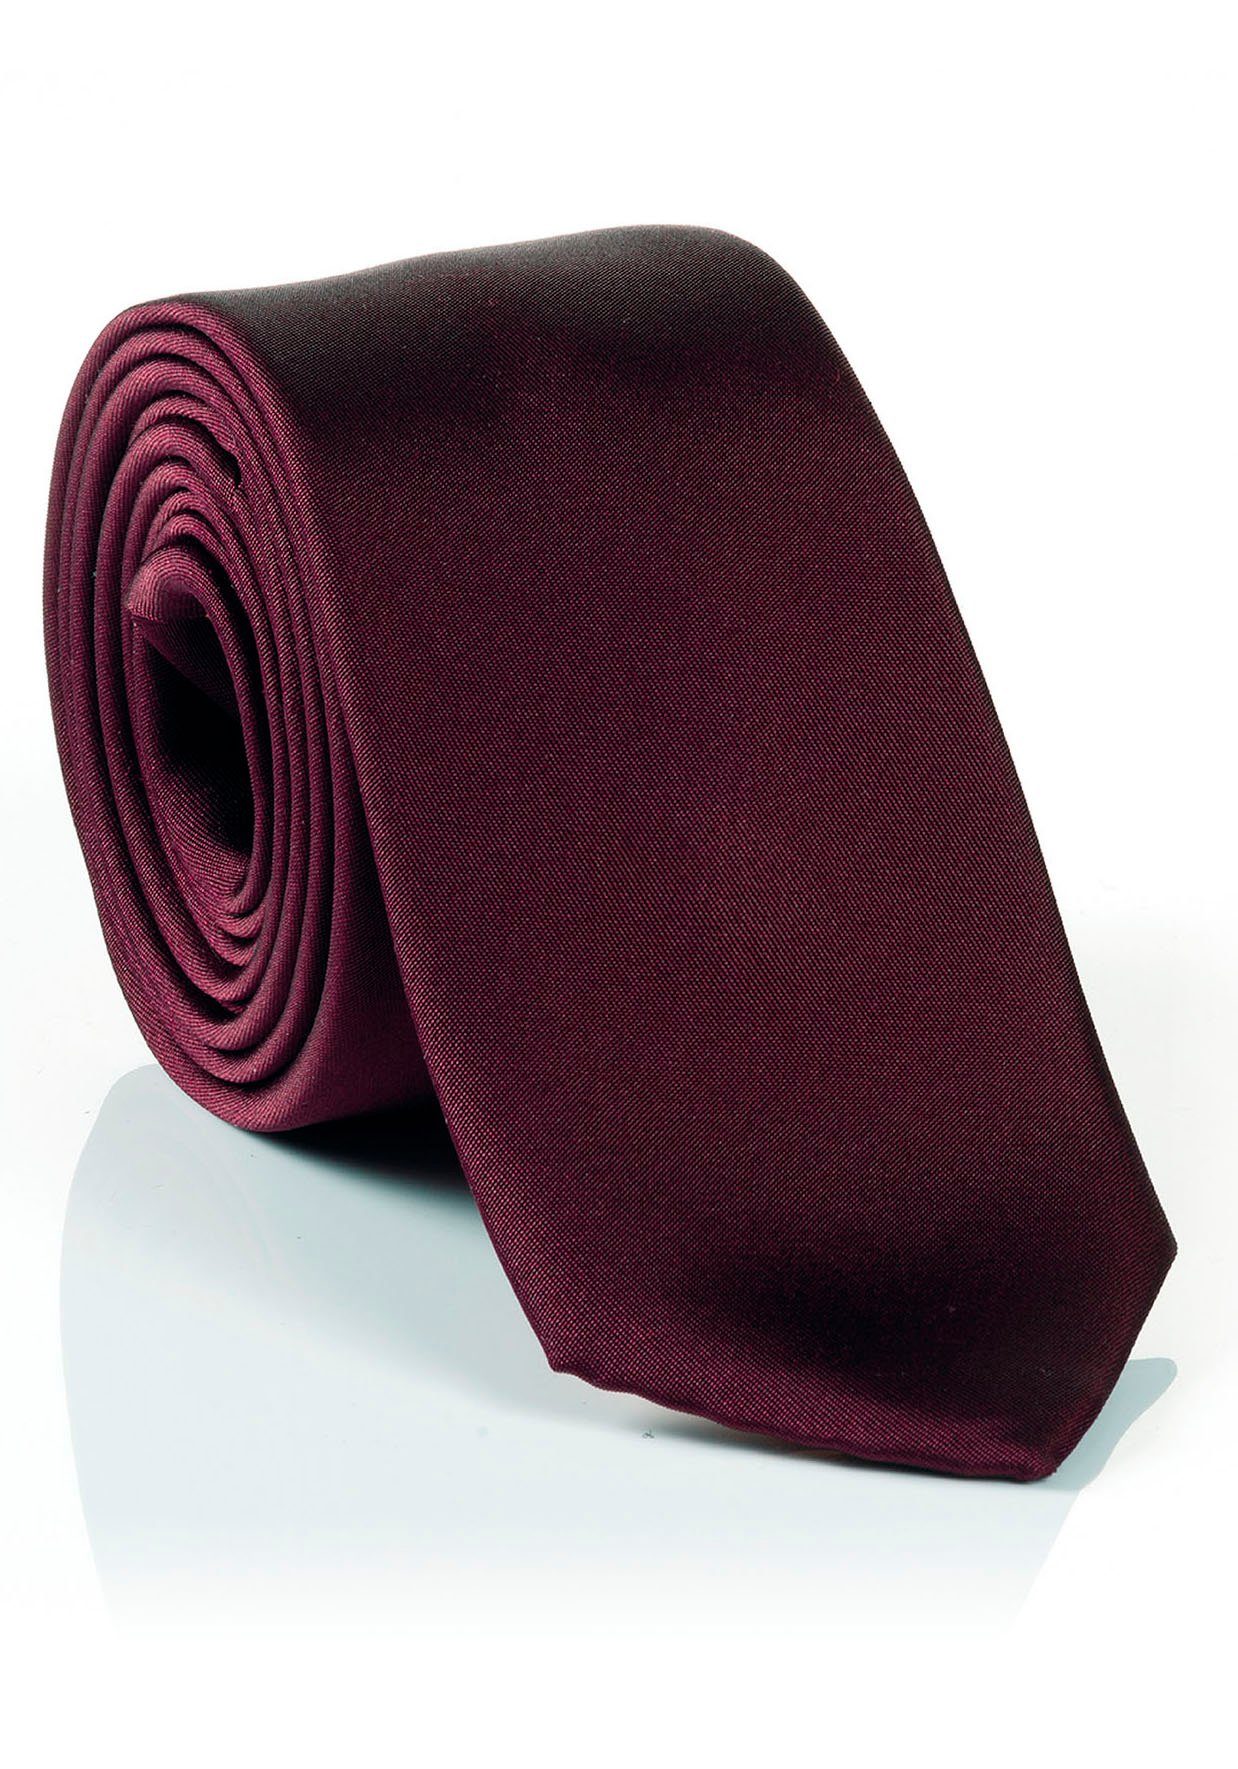 MONTI Krawatte aus reiner Seide, bordeaux Uni-Pastellfarben